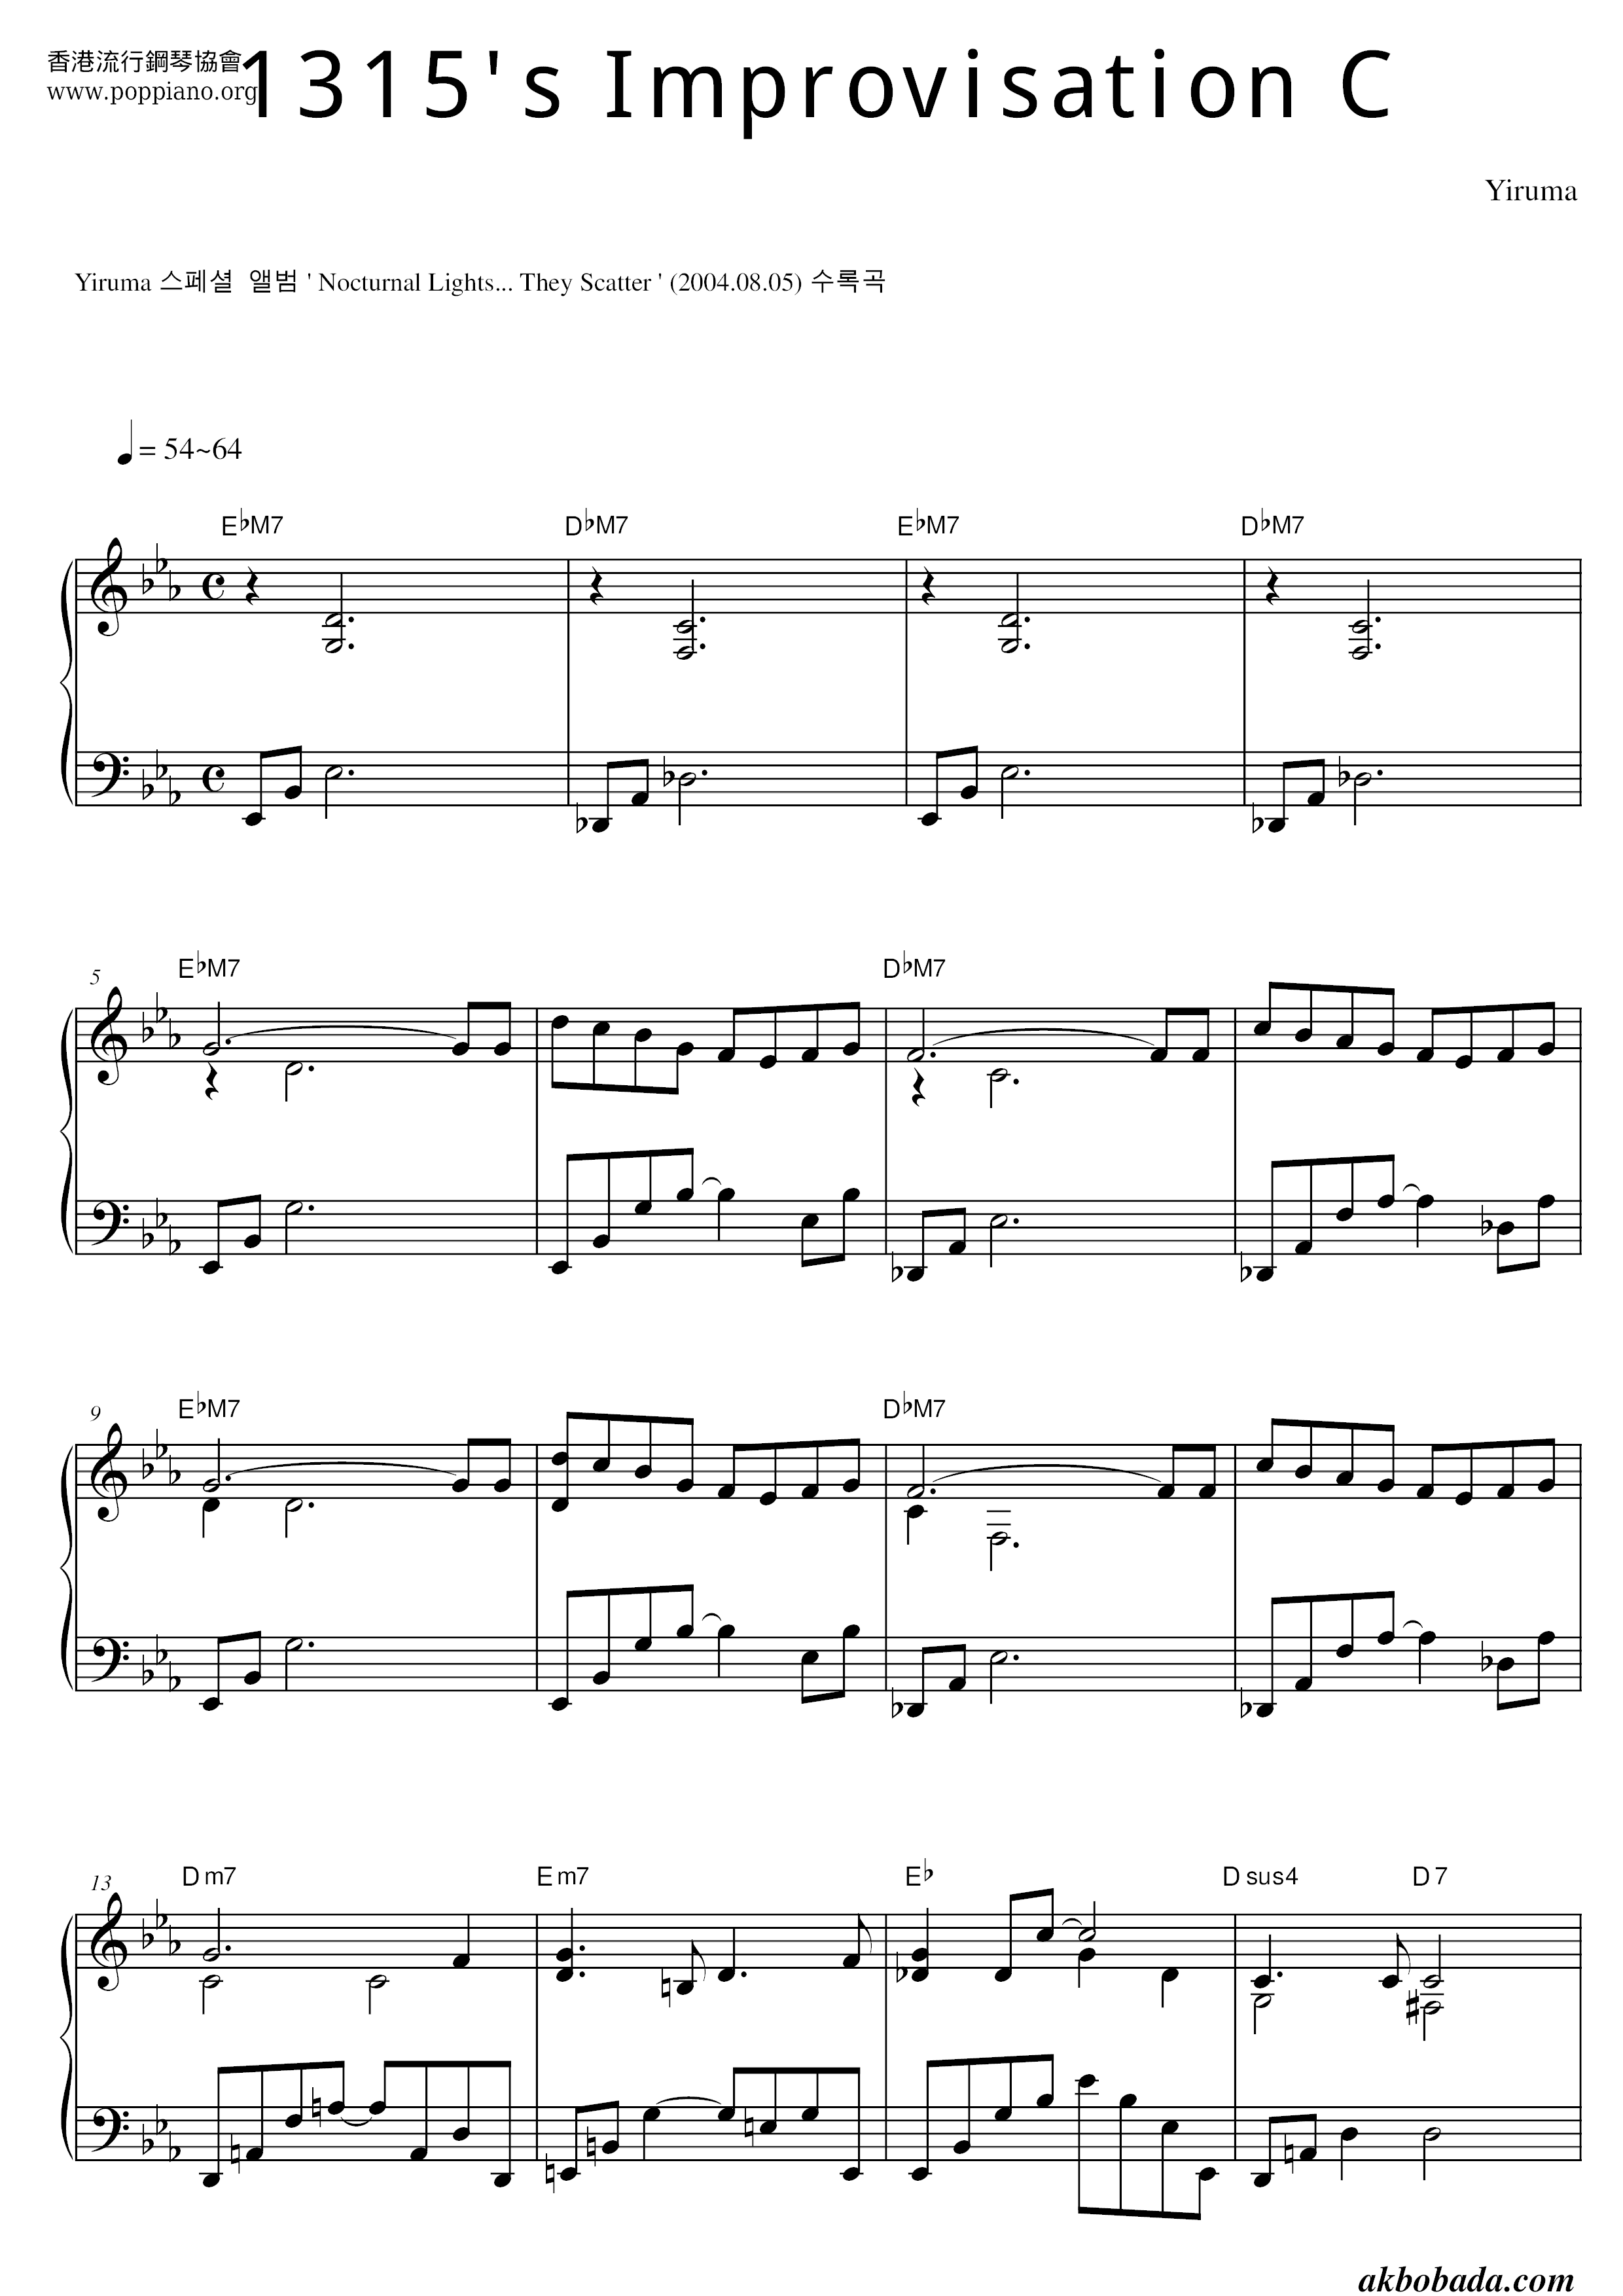 1315's Improvisation Cピアノ譜